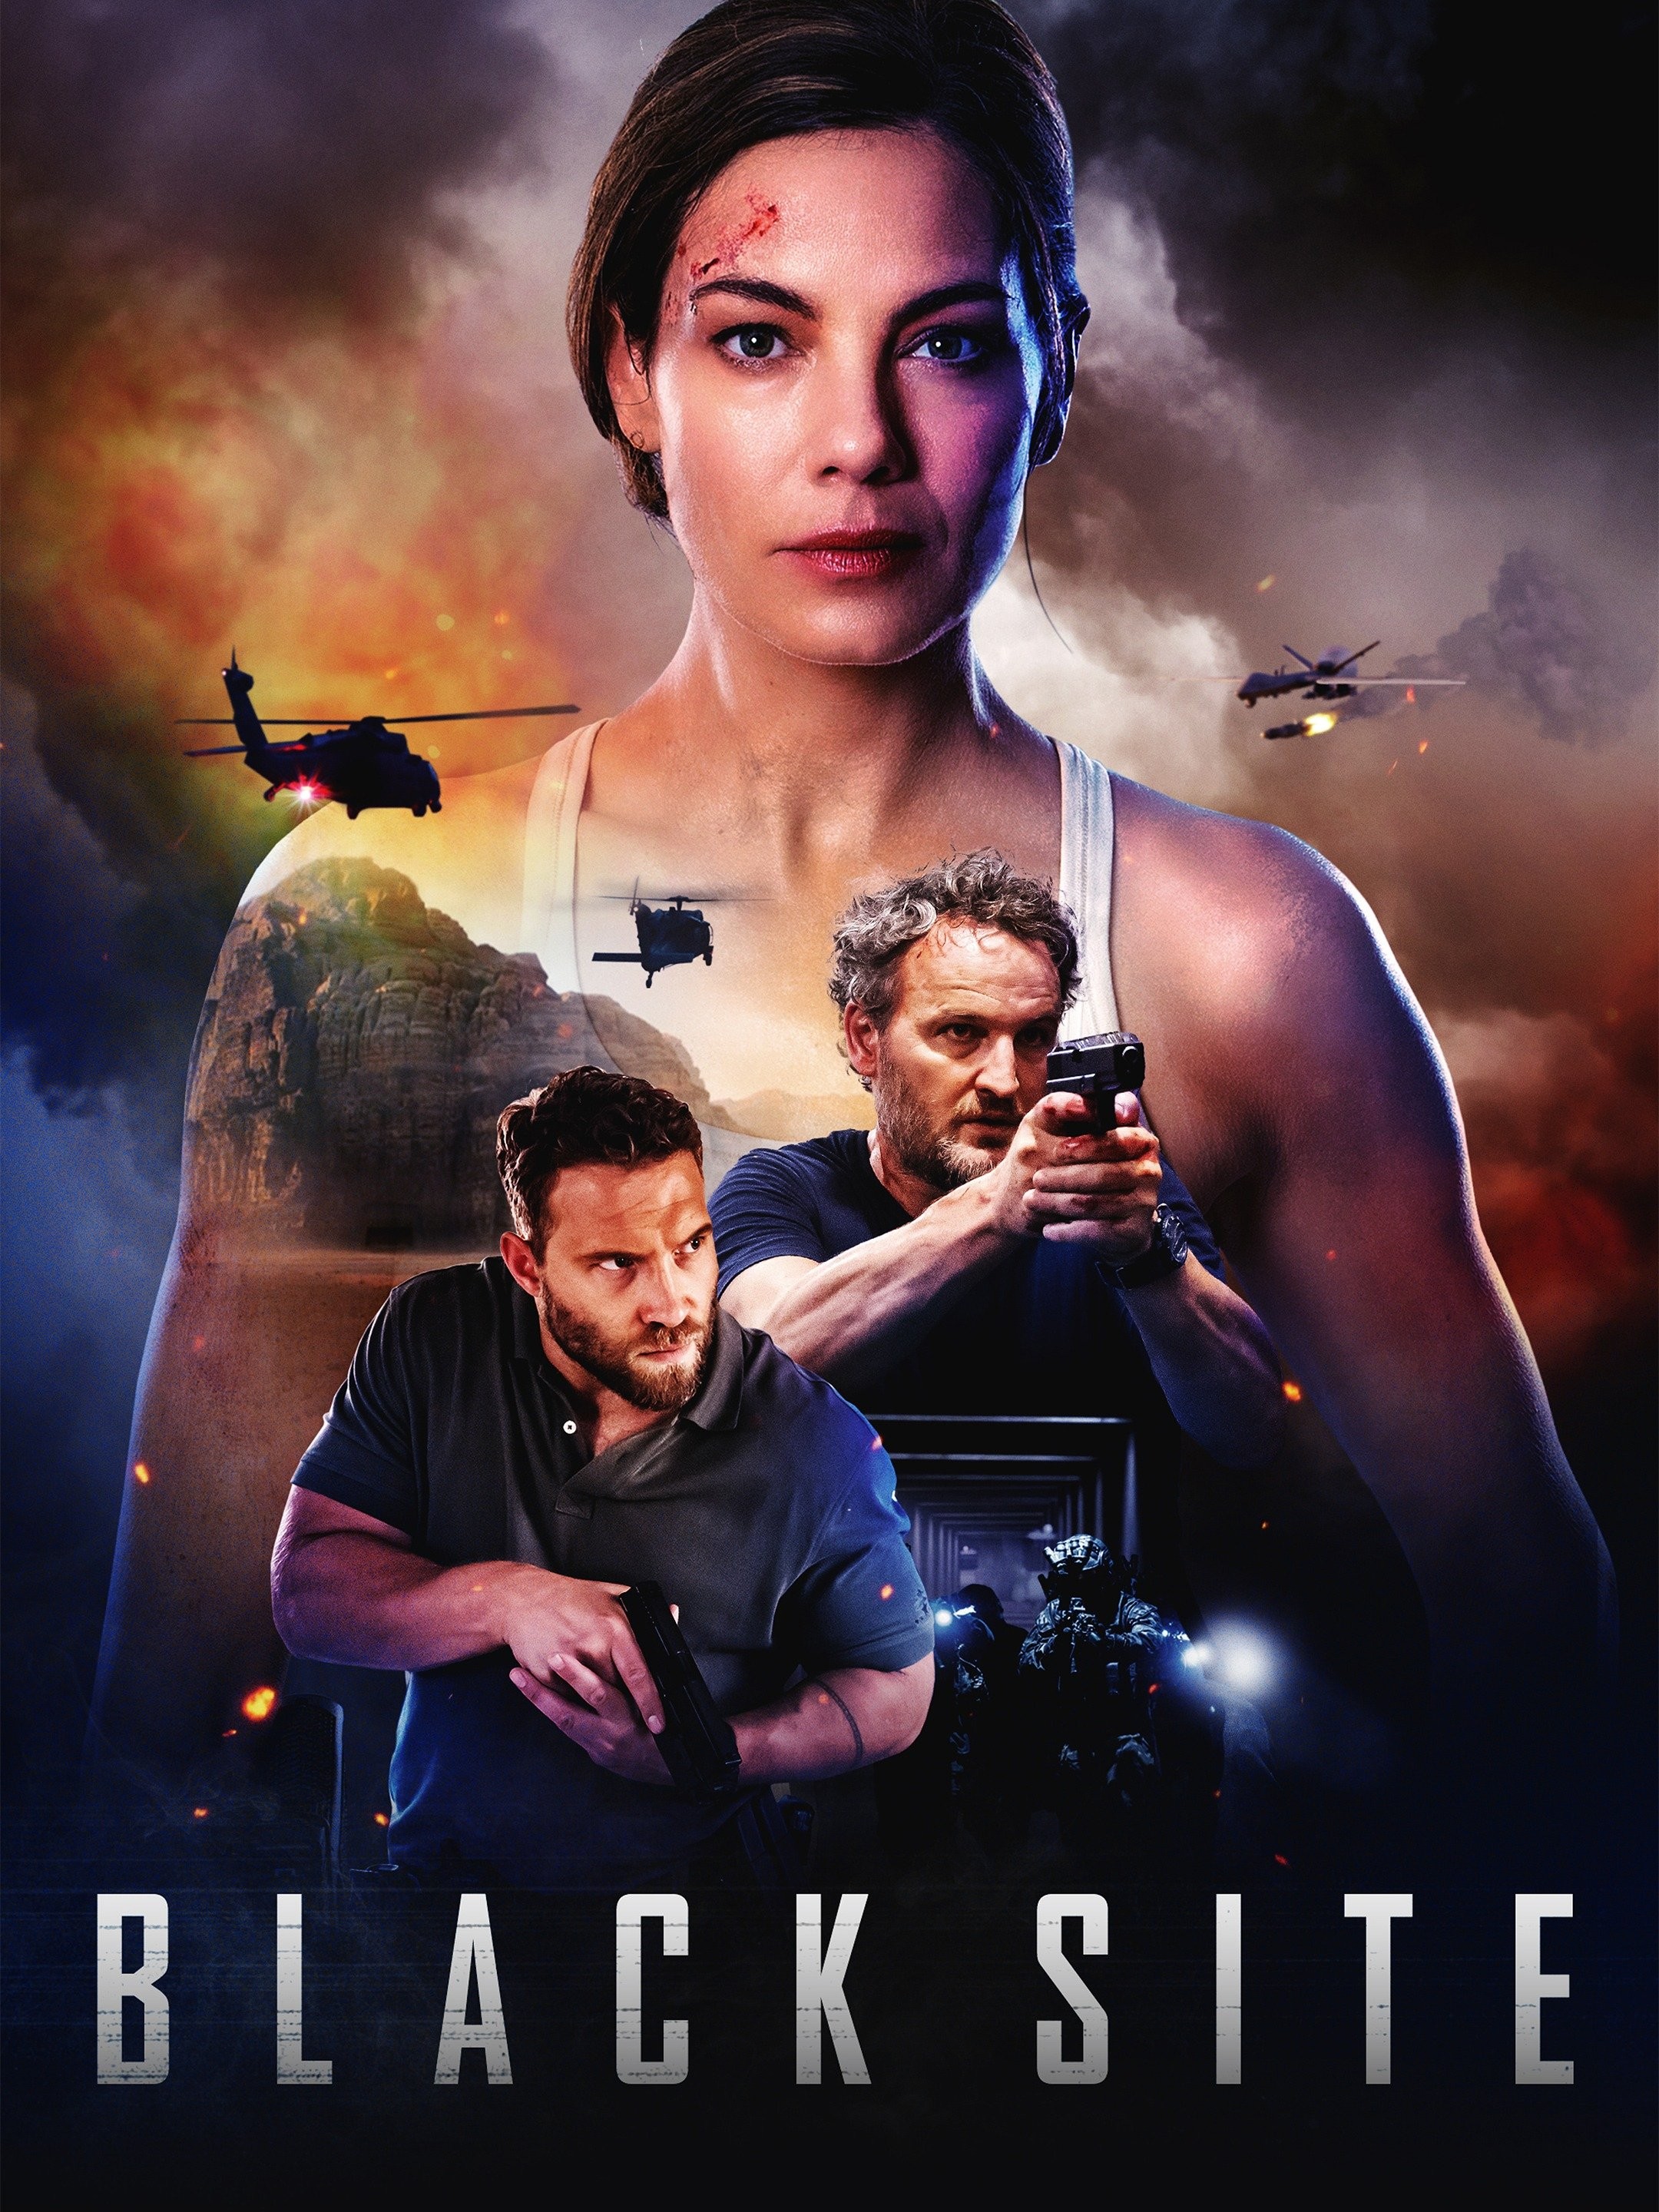  Black Site : Michelle Monaghan, Jason Clarke, Jai